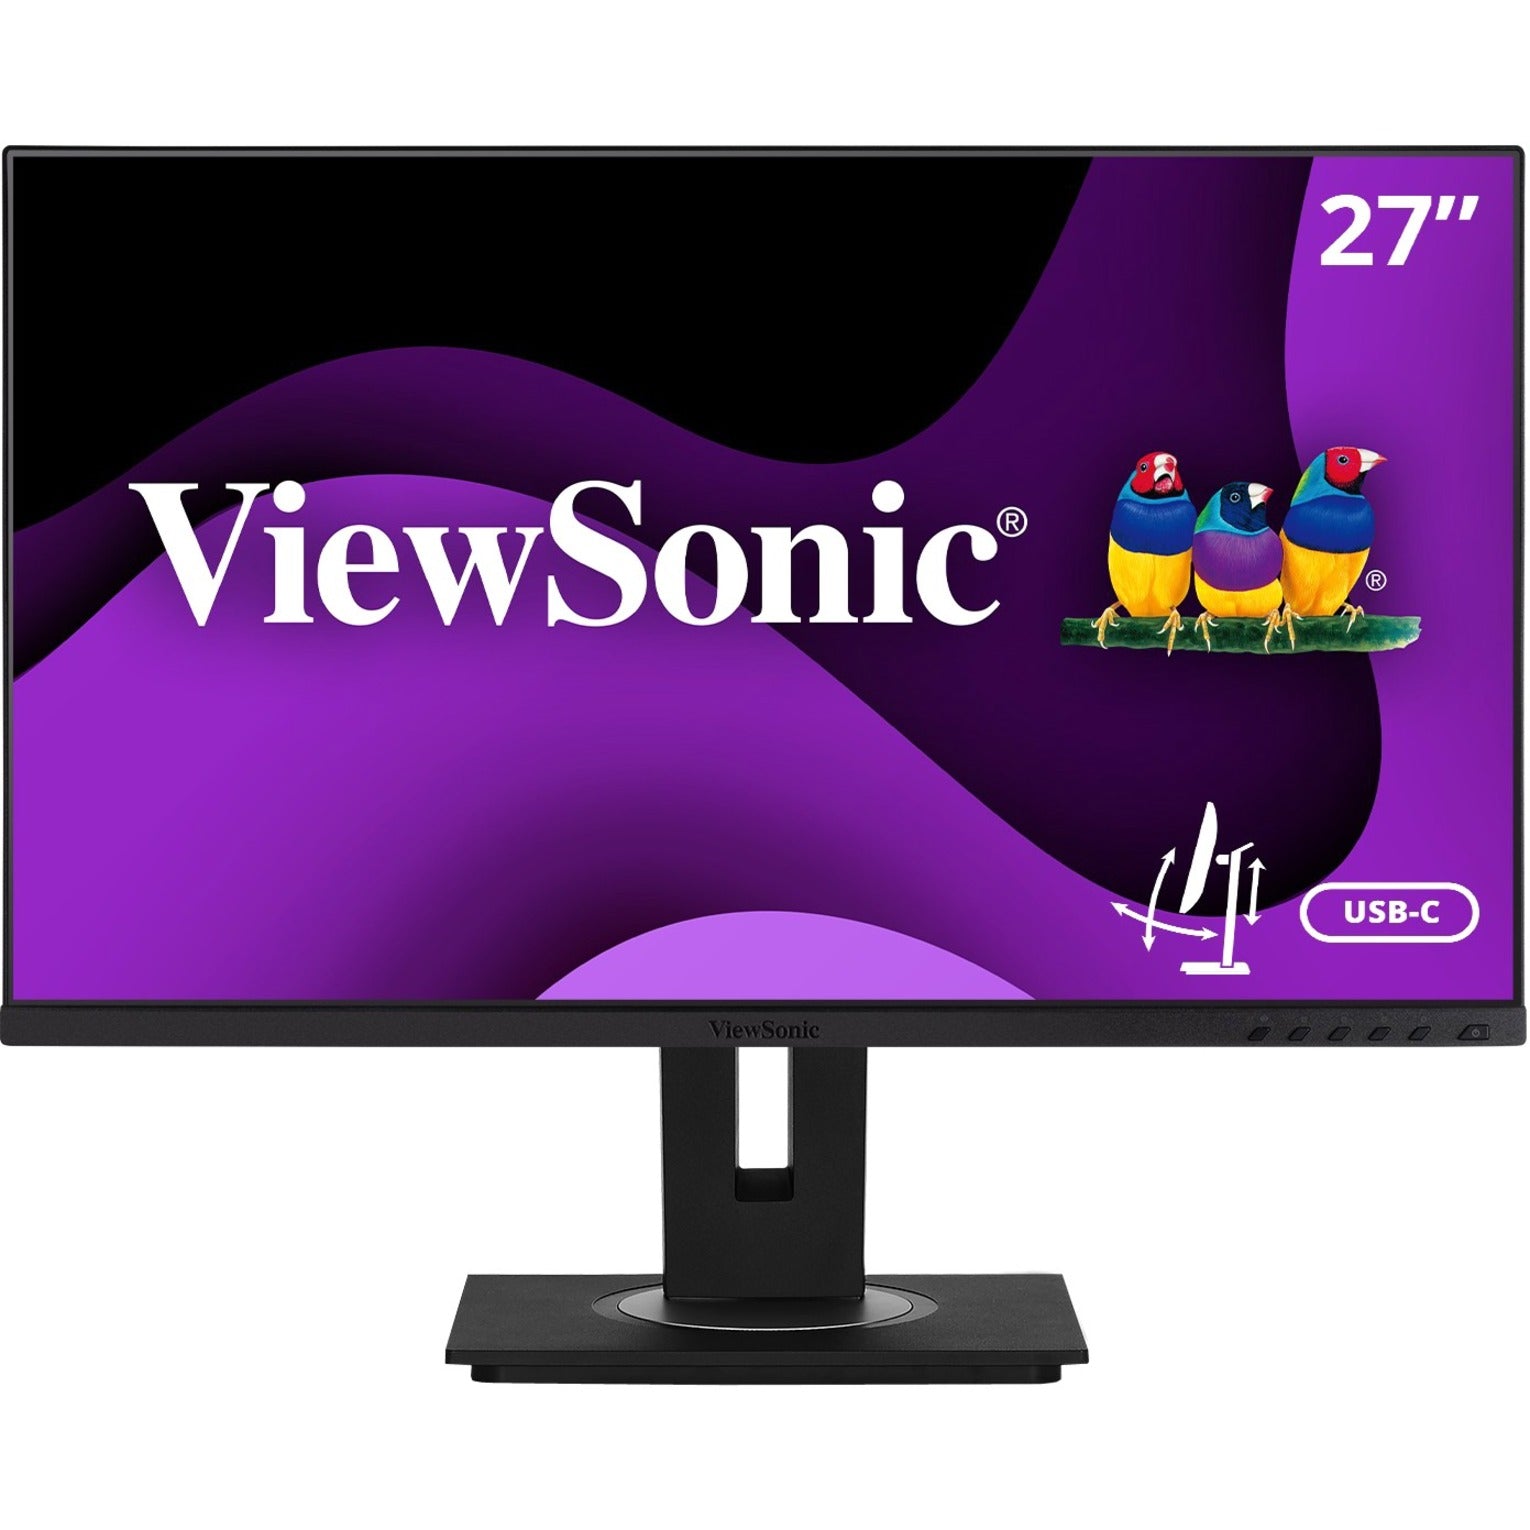 ViewSonic VG2755 27" SuperClear IPS Full HD Monitor, Advanced Ergonomics, 1920x1080 Resolution